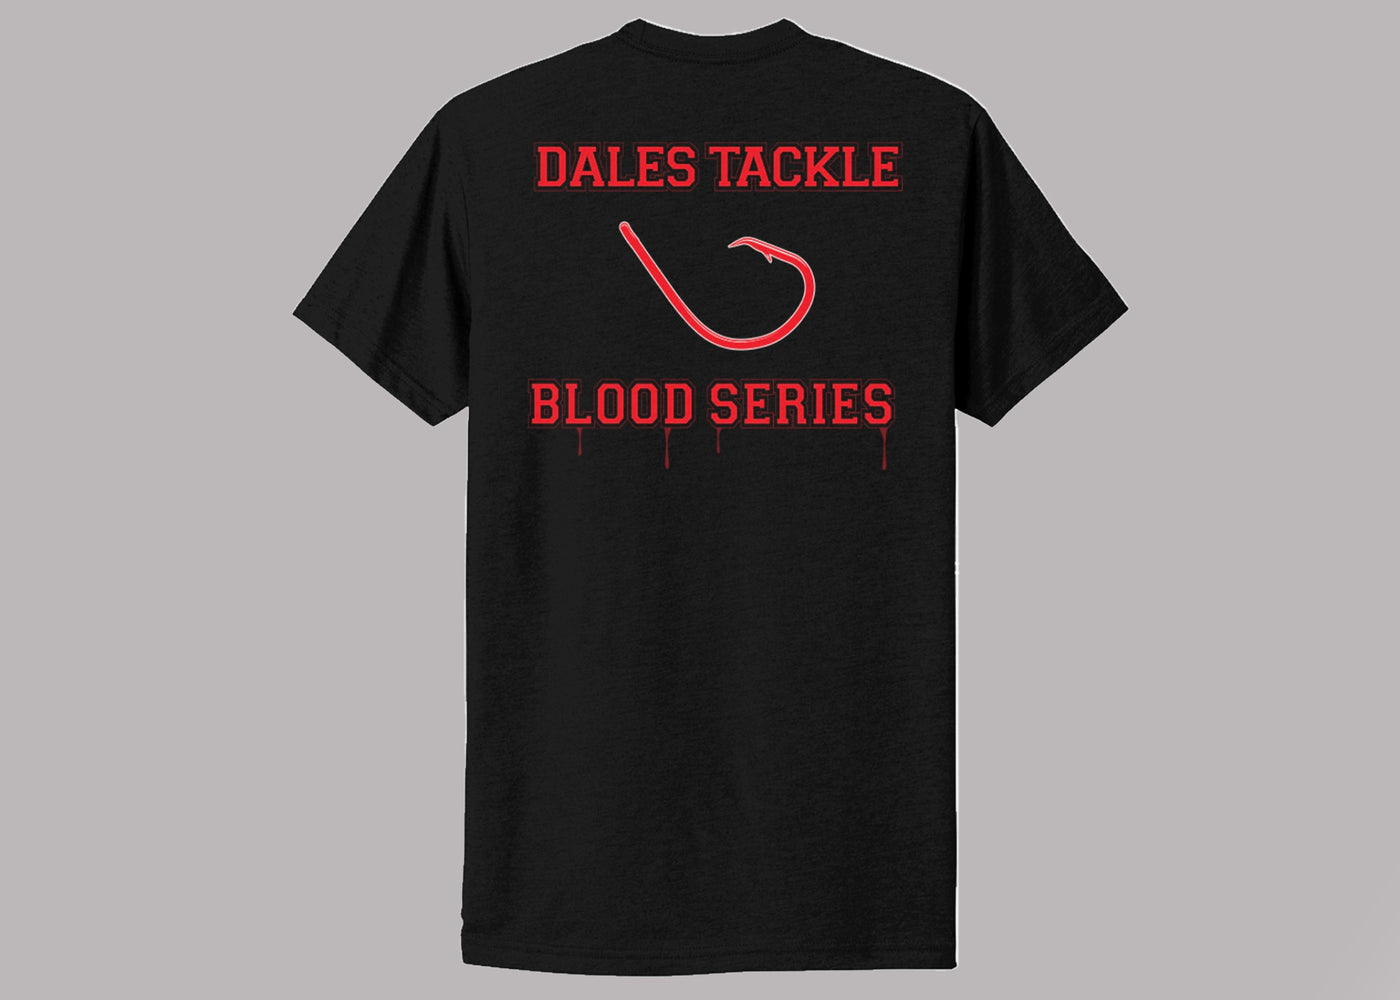 Dales Tackle BLOOD SERIES